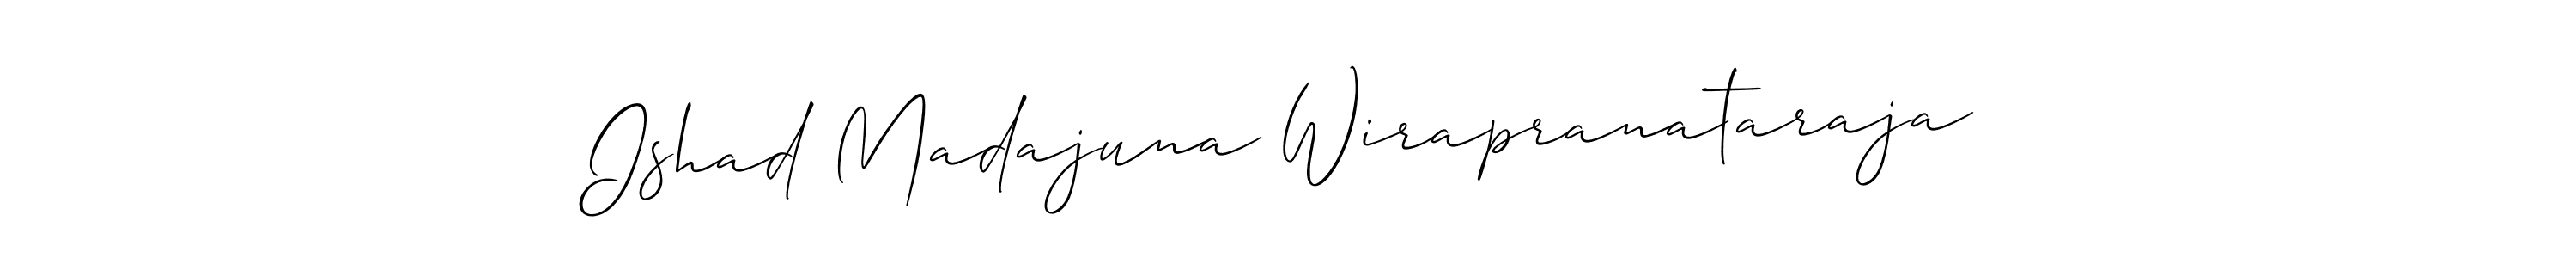 How to make Ishad Madajuna Wirapranataraja signature? Allison_Script is a professional autograph style. Create handwritten signature for Ishad Madajuna Wirapranataraja name. Ishad Madajuna Wirapranataraja signature style 2 images and pictures png